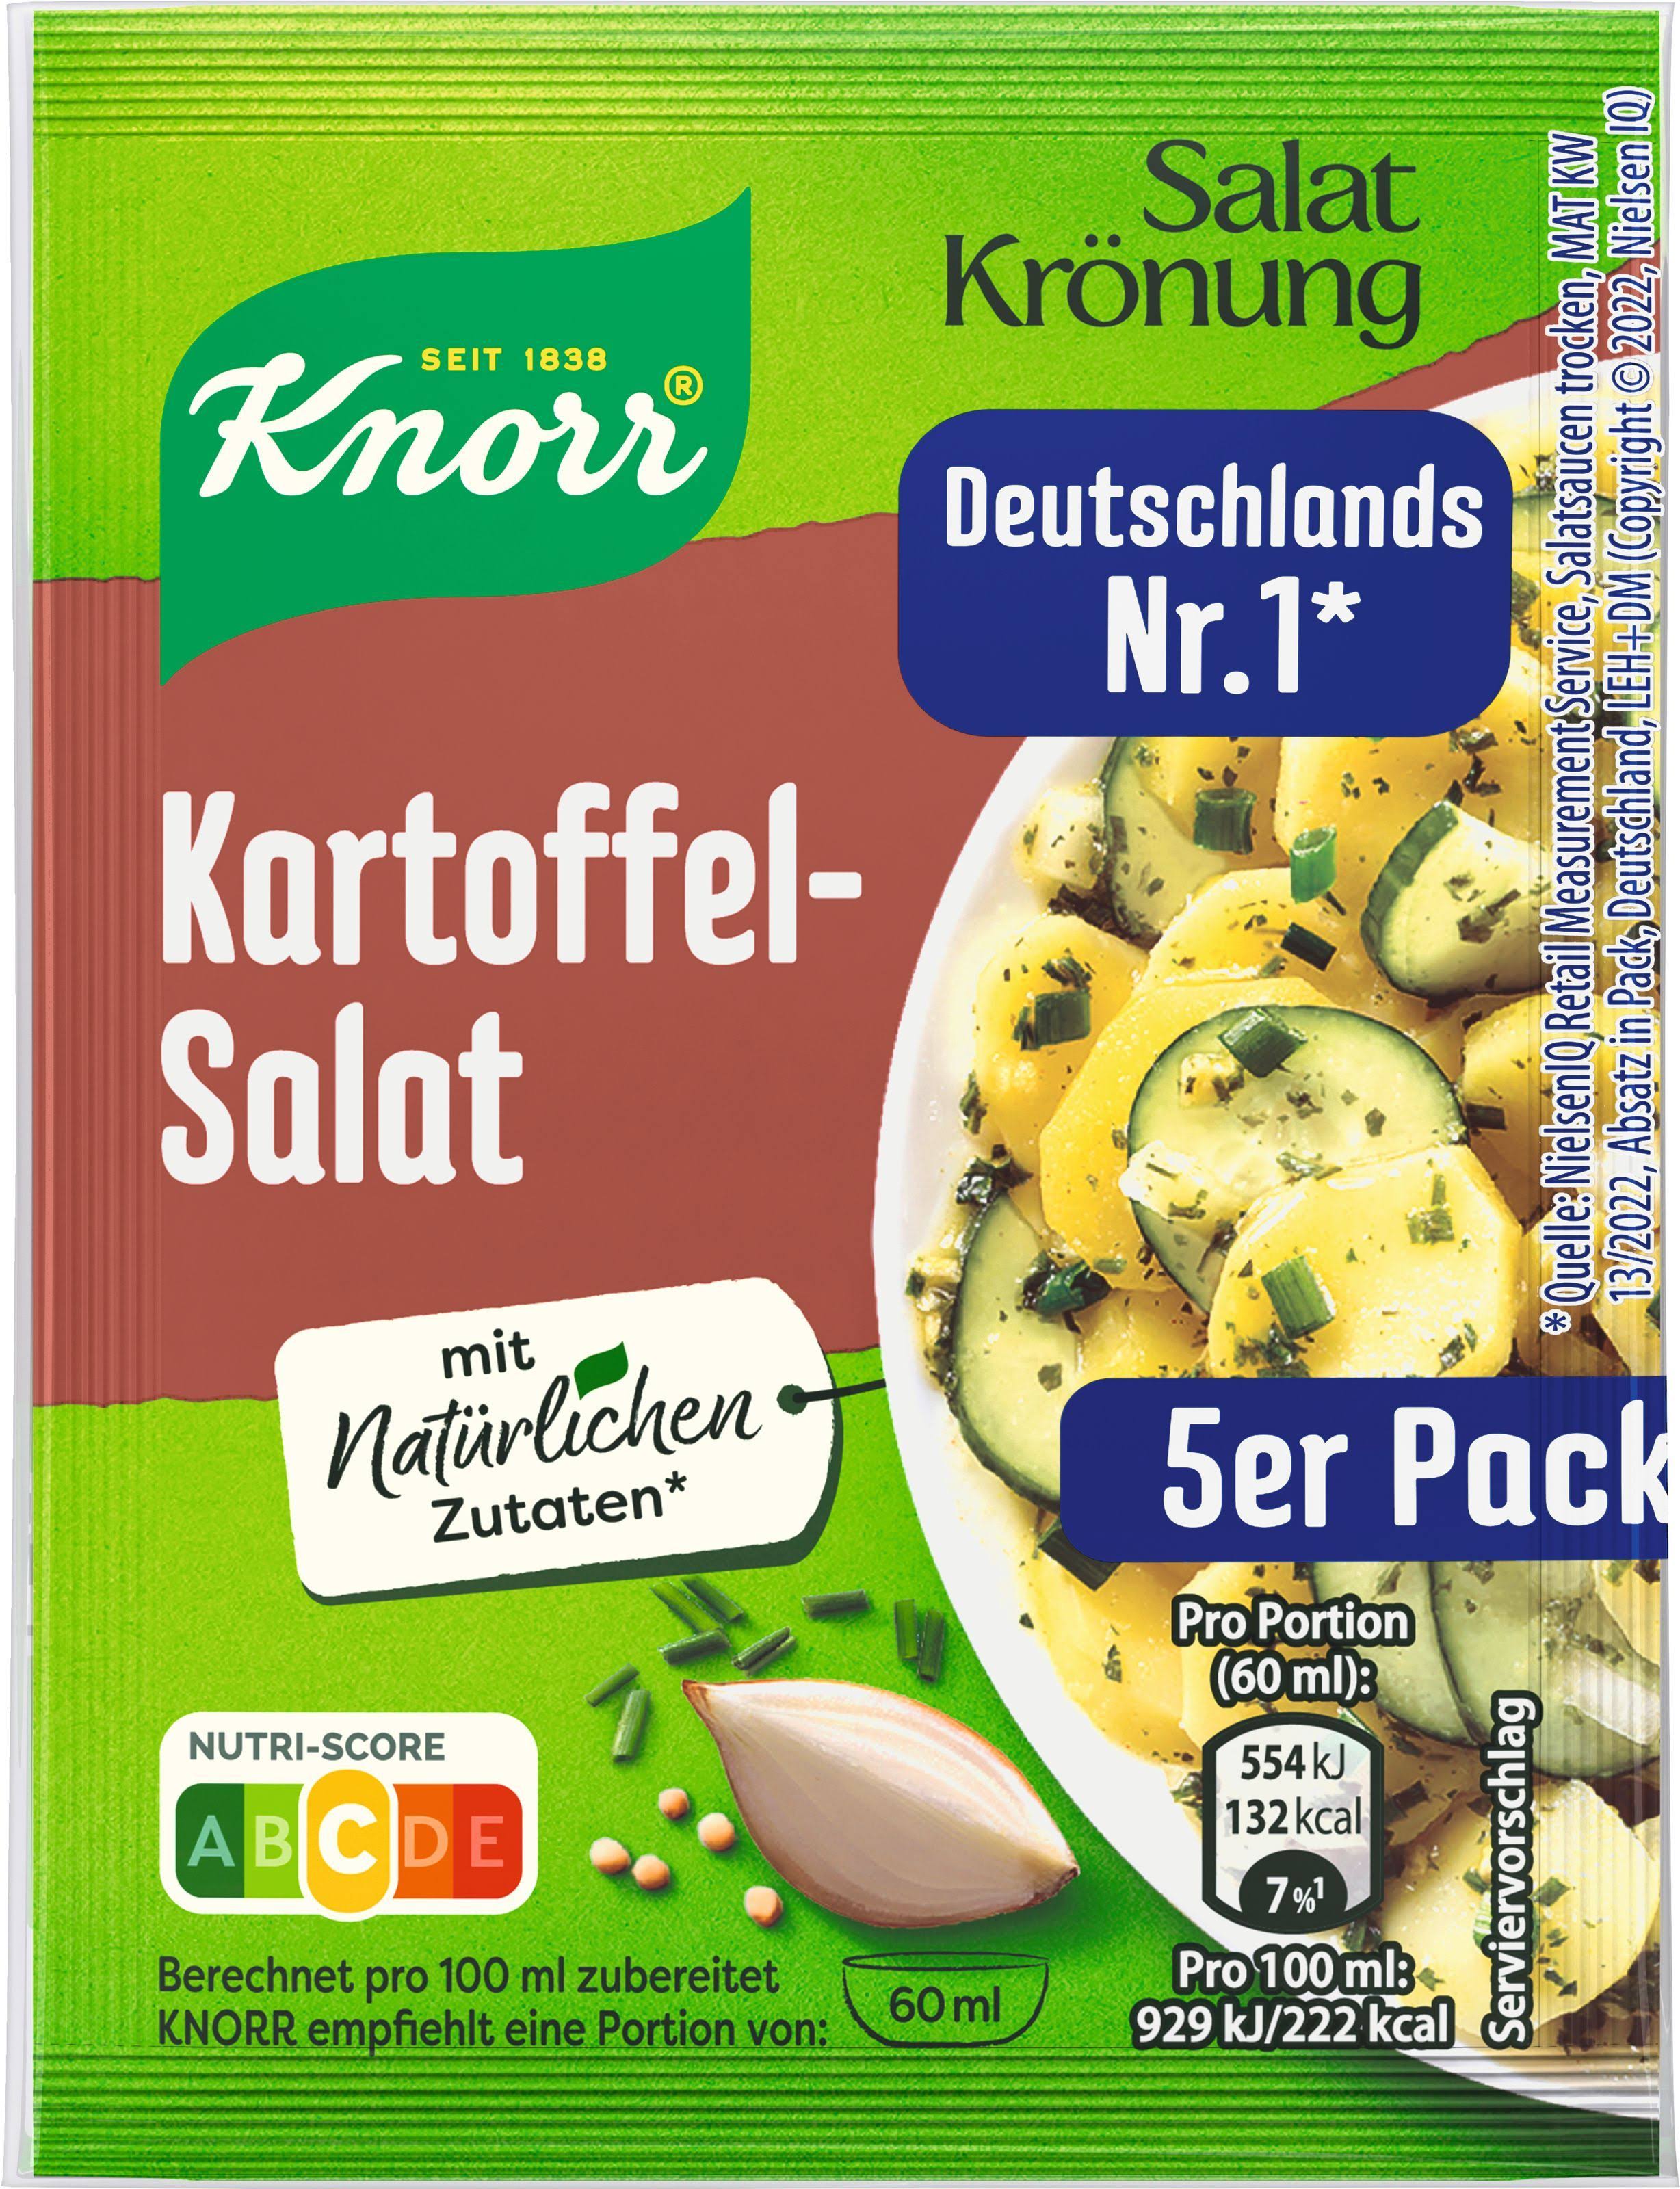 Knorr Salat Kroenung Potato Salad 5 Packs Krönung Dressing from Germany